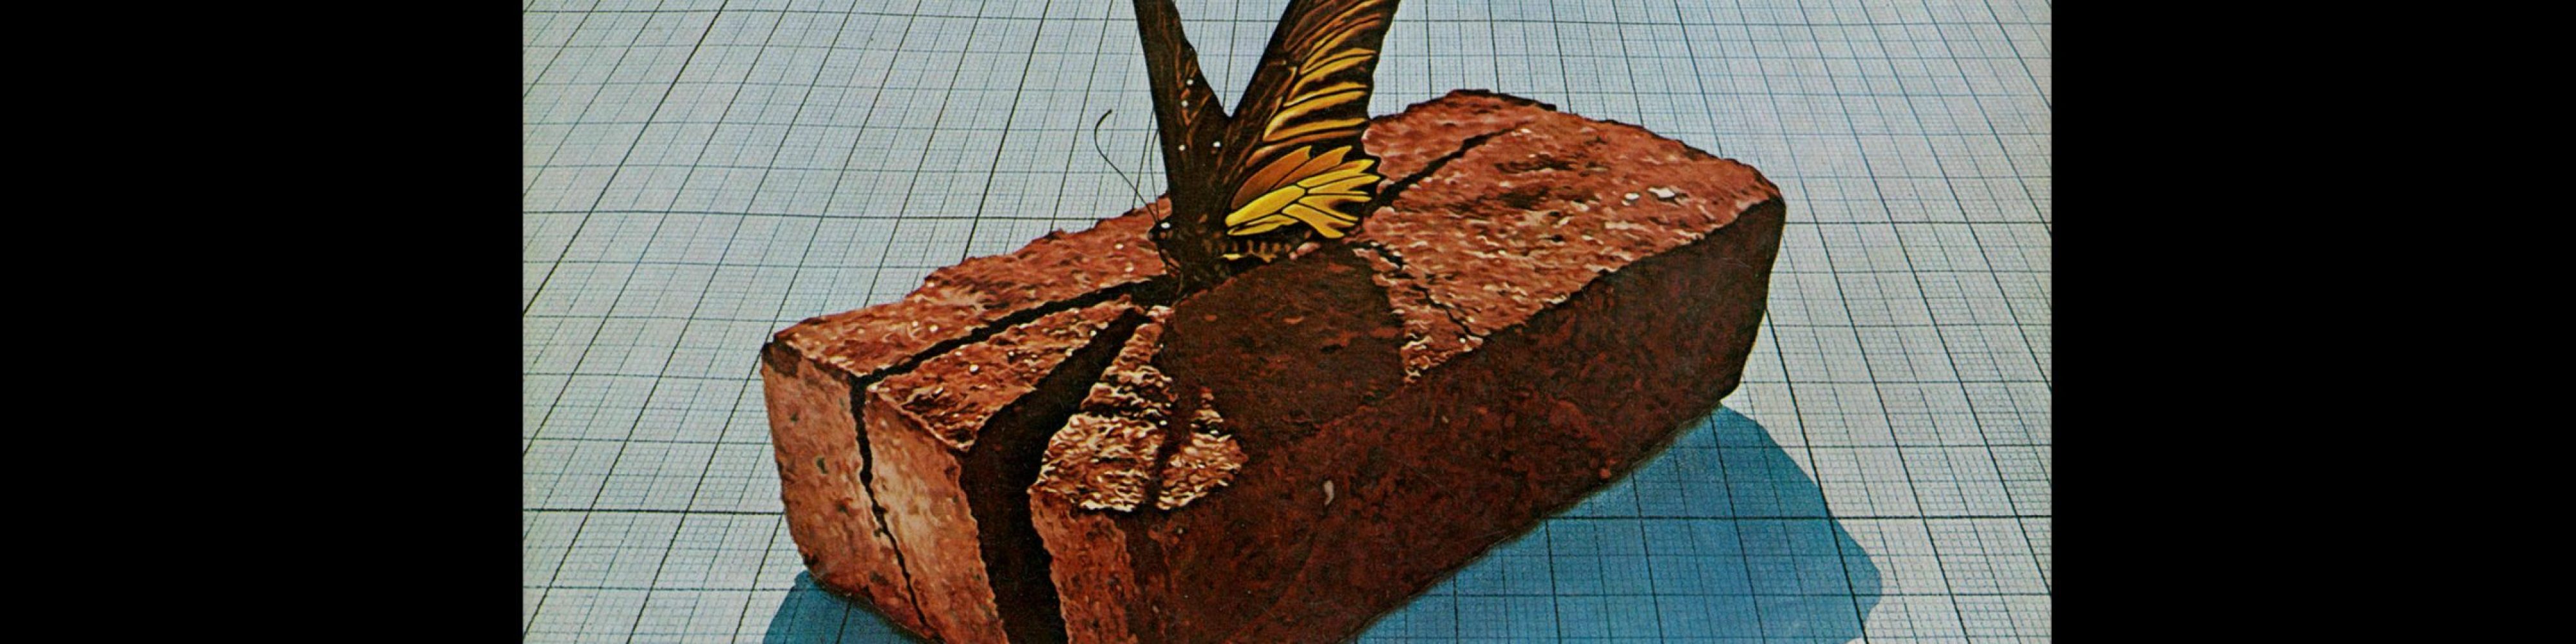 Novum Gebrauchsgraphik, 12, 1975. Cover design by Pierre Peyrolles